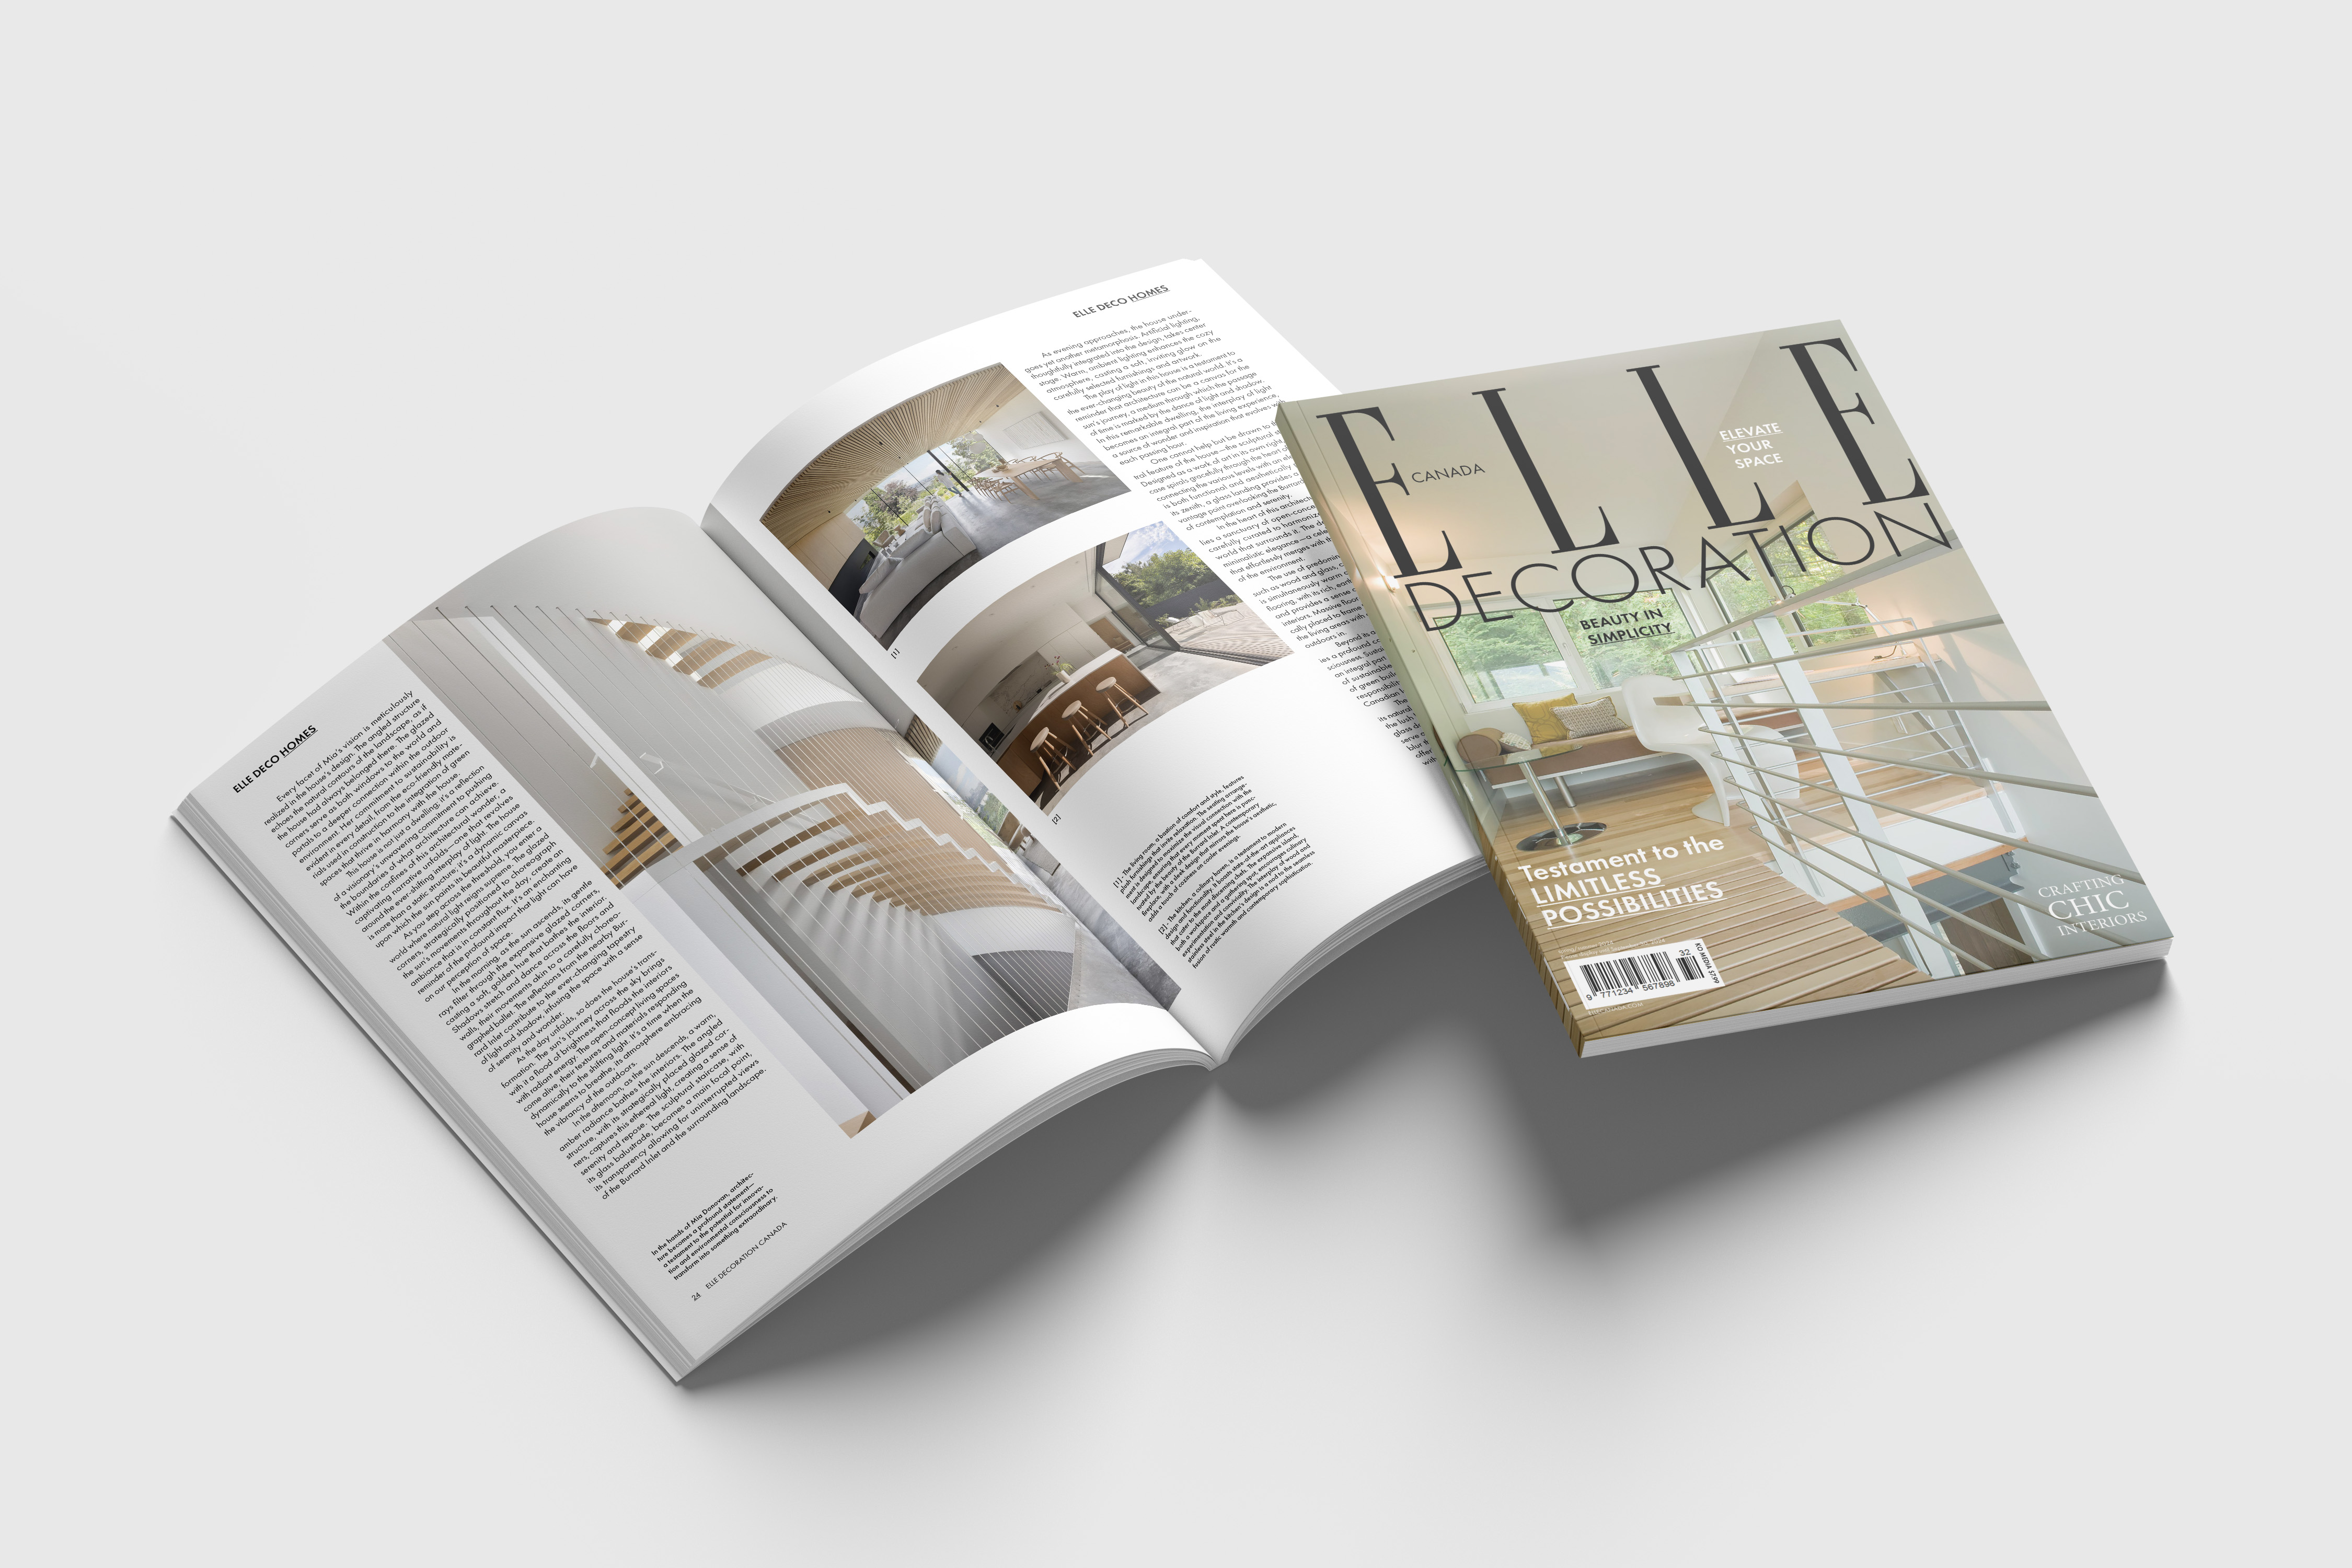 Magazine cove for Elle Decoration Magazine concept